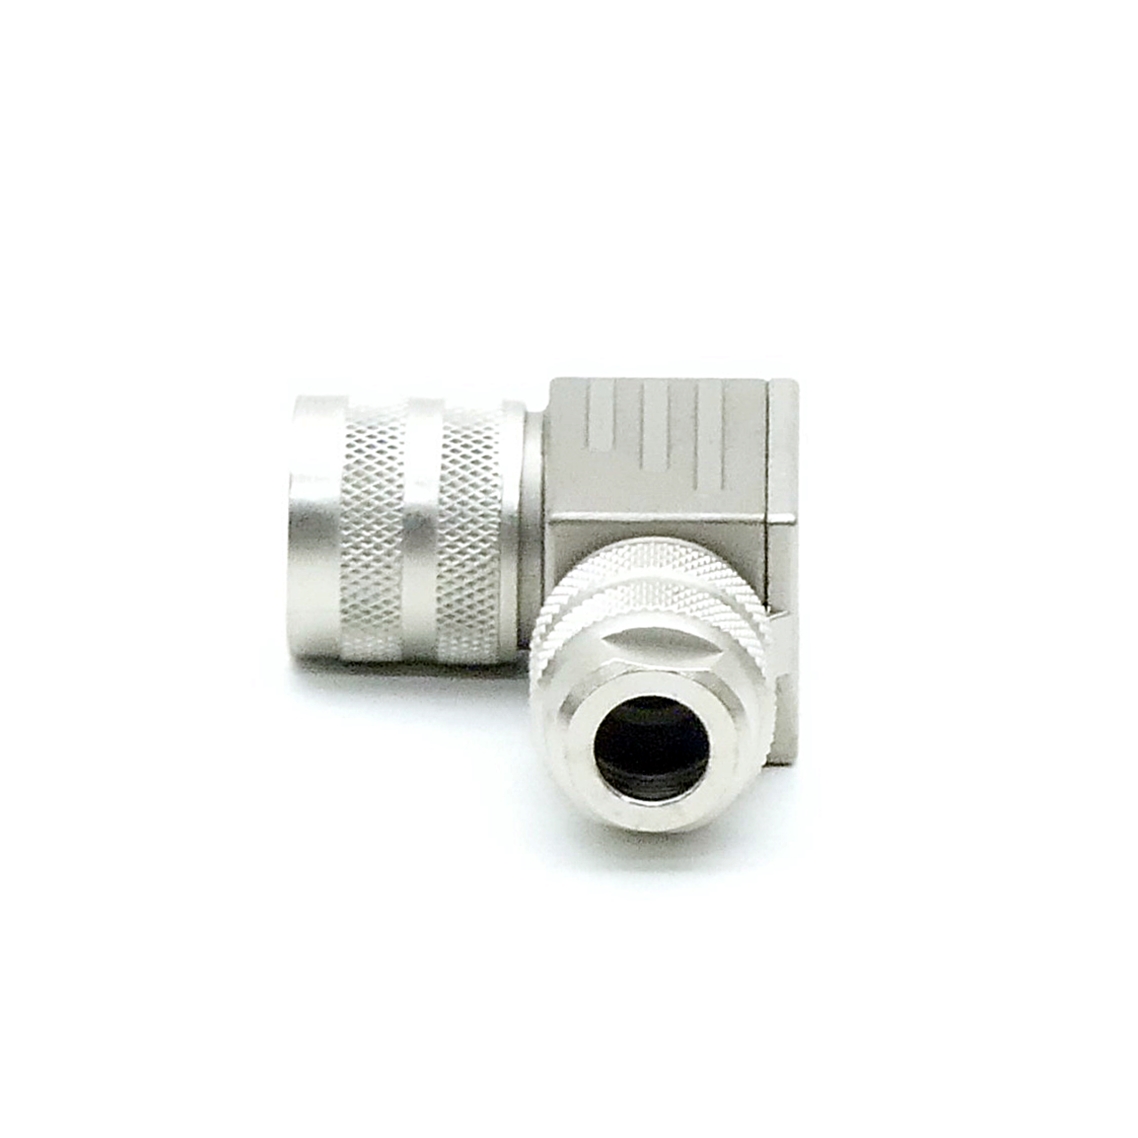 3 Pieces Miniature connector 